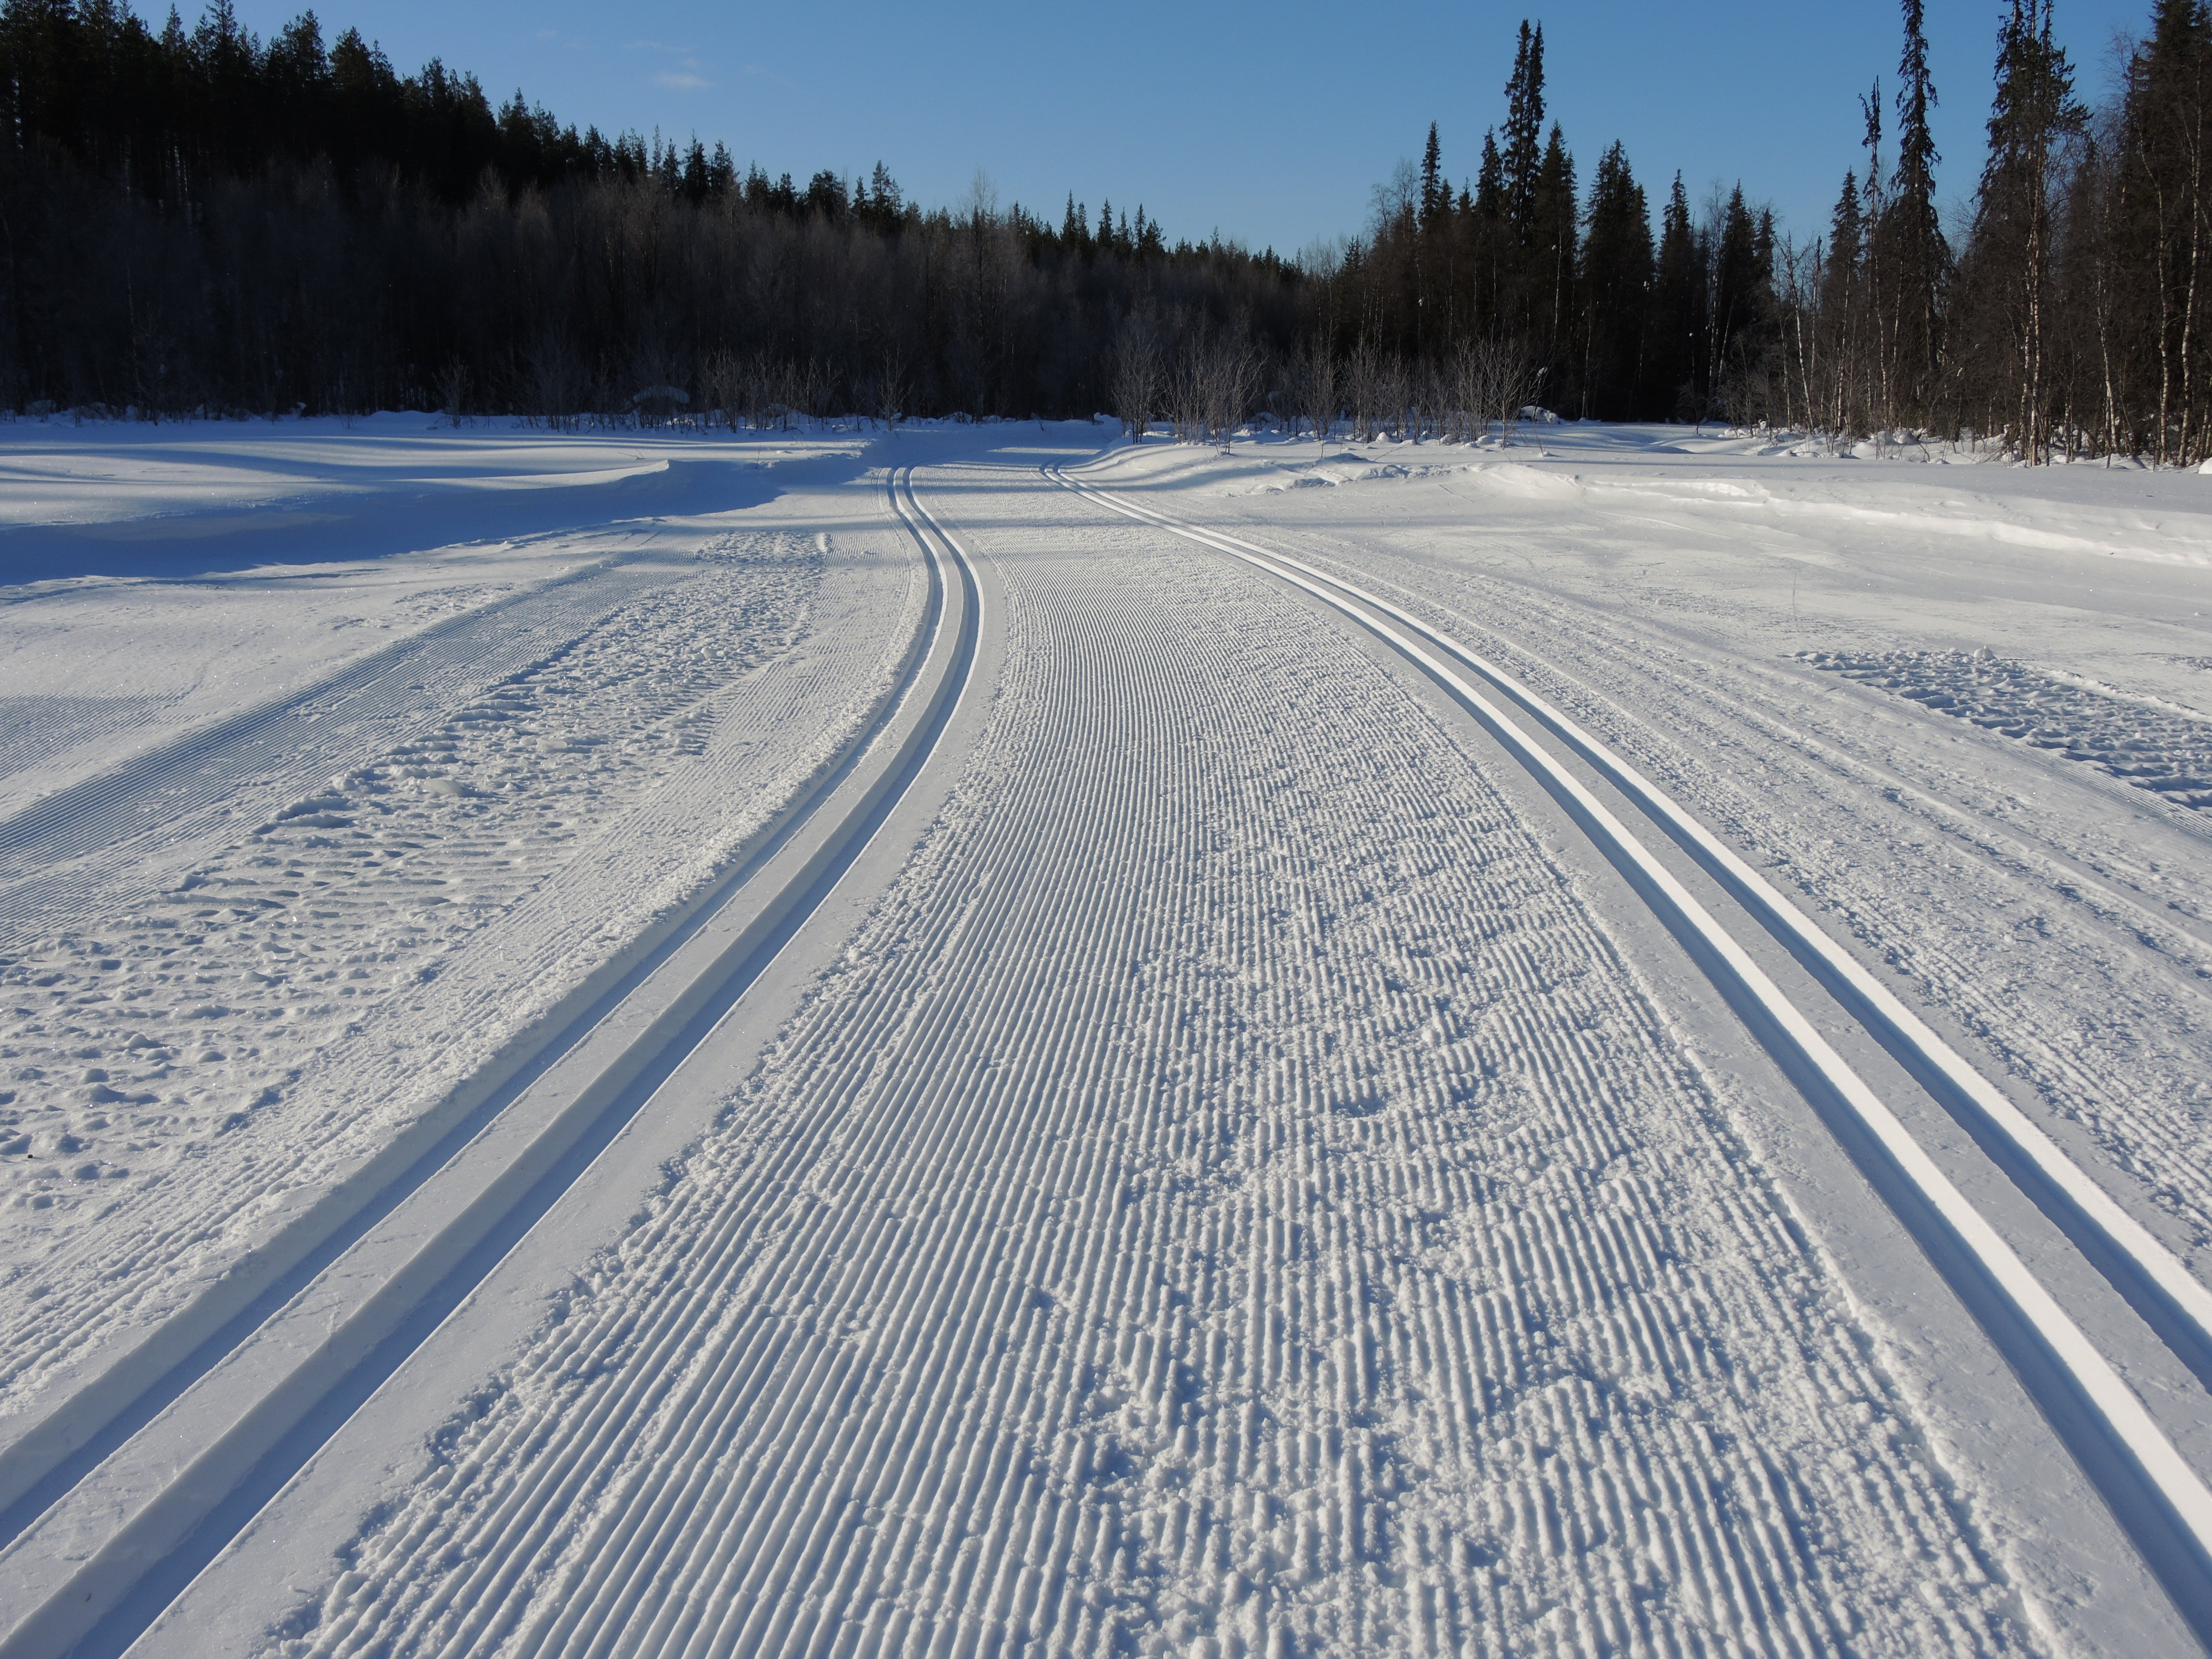 Участки лыжной трассы. Лыжня. Лыжная дорога. Лыжные трассы. Лыжи на лыжне.